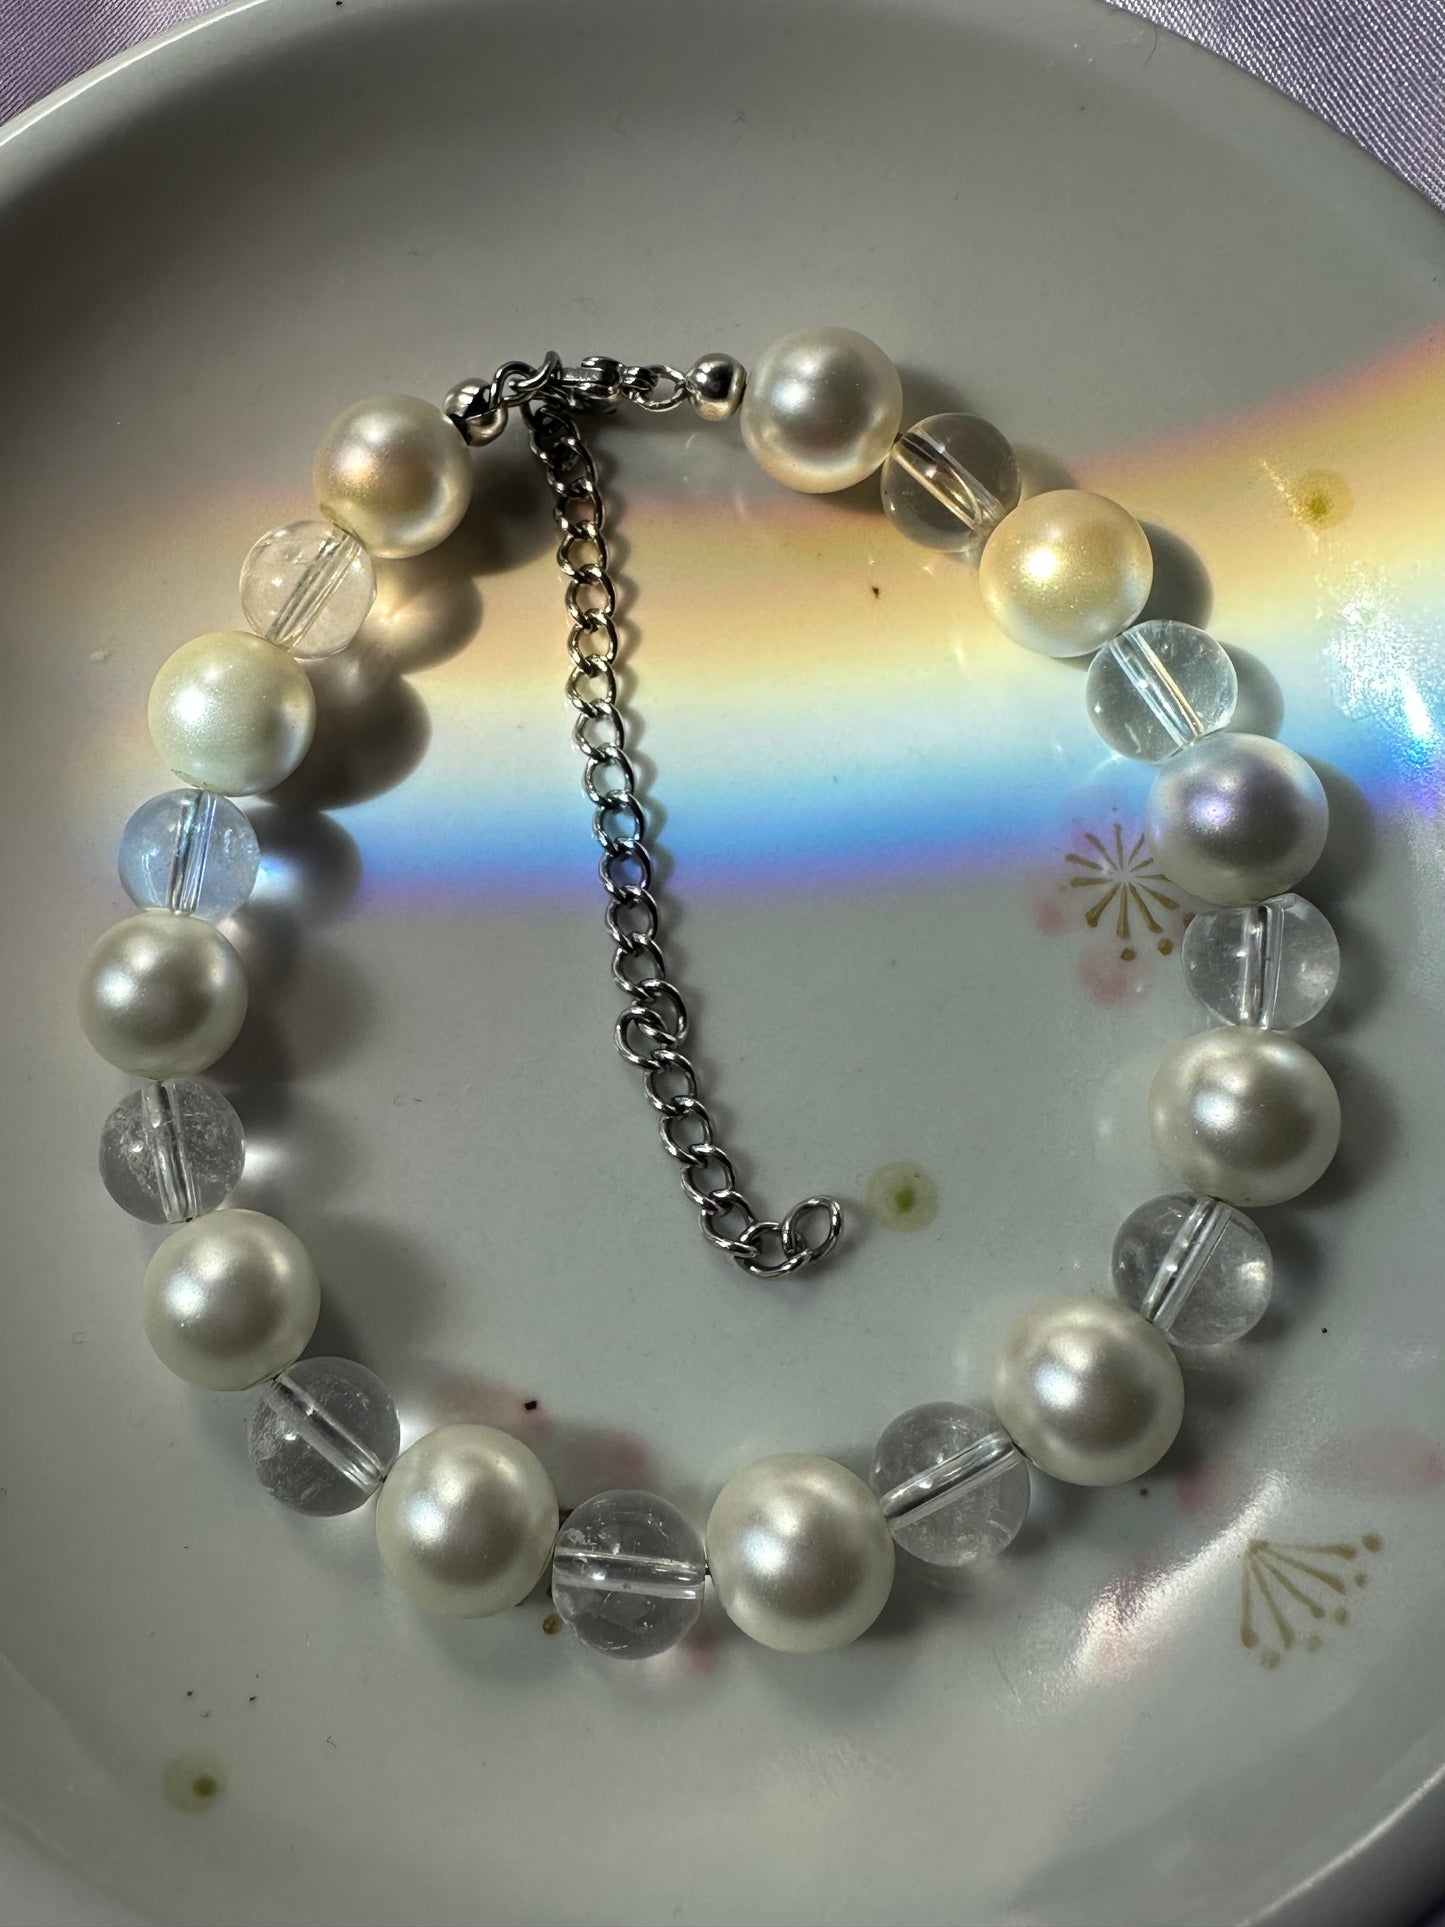 The Pearlescent Bracelet